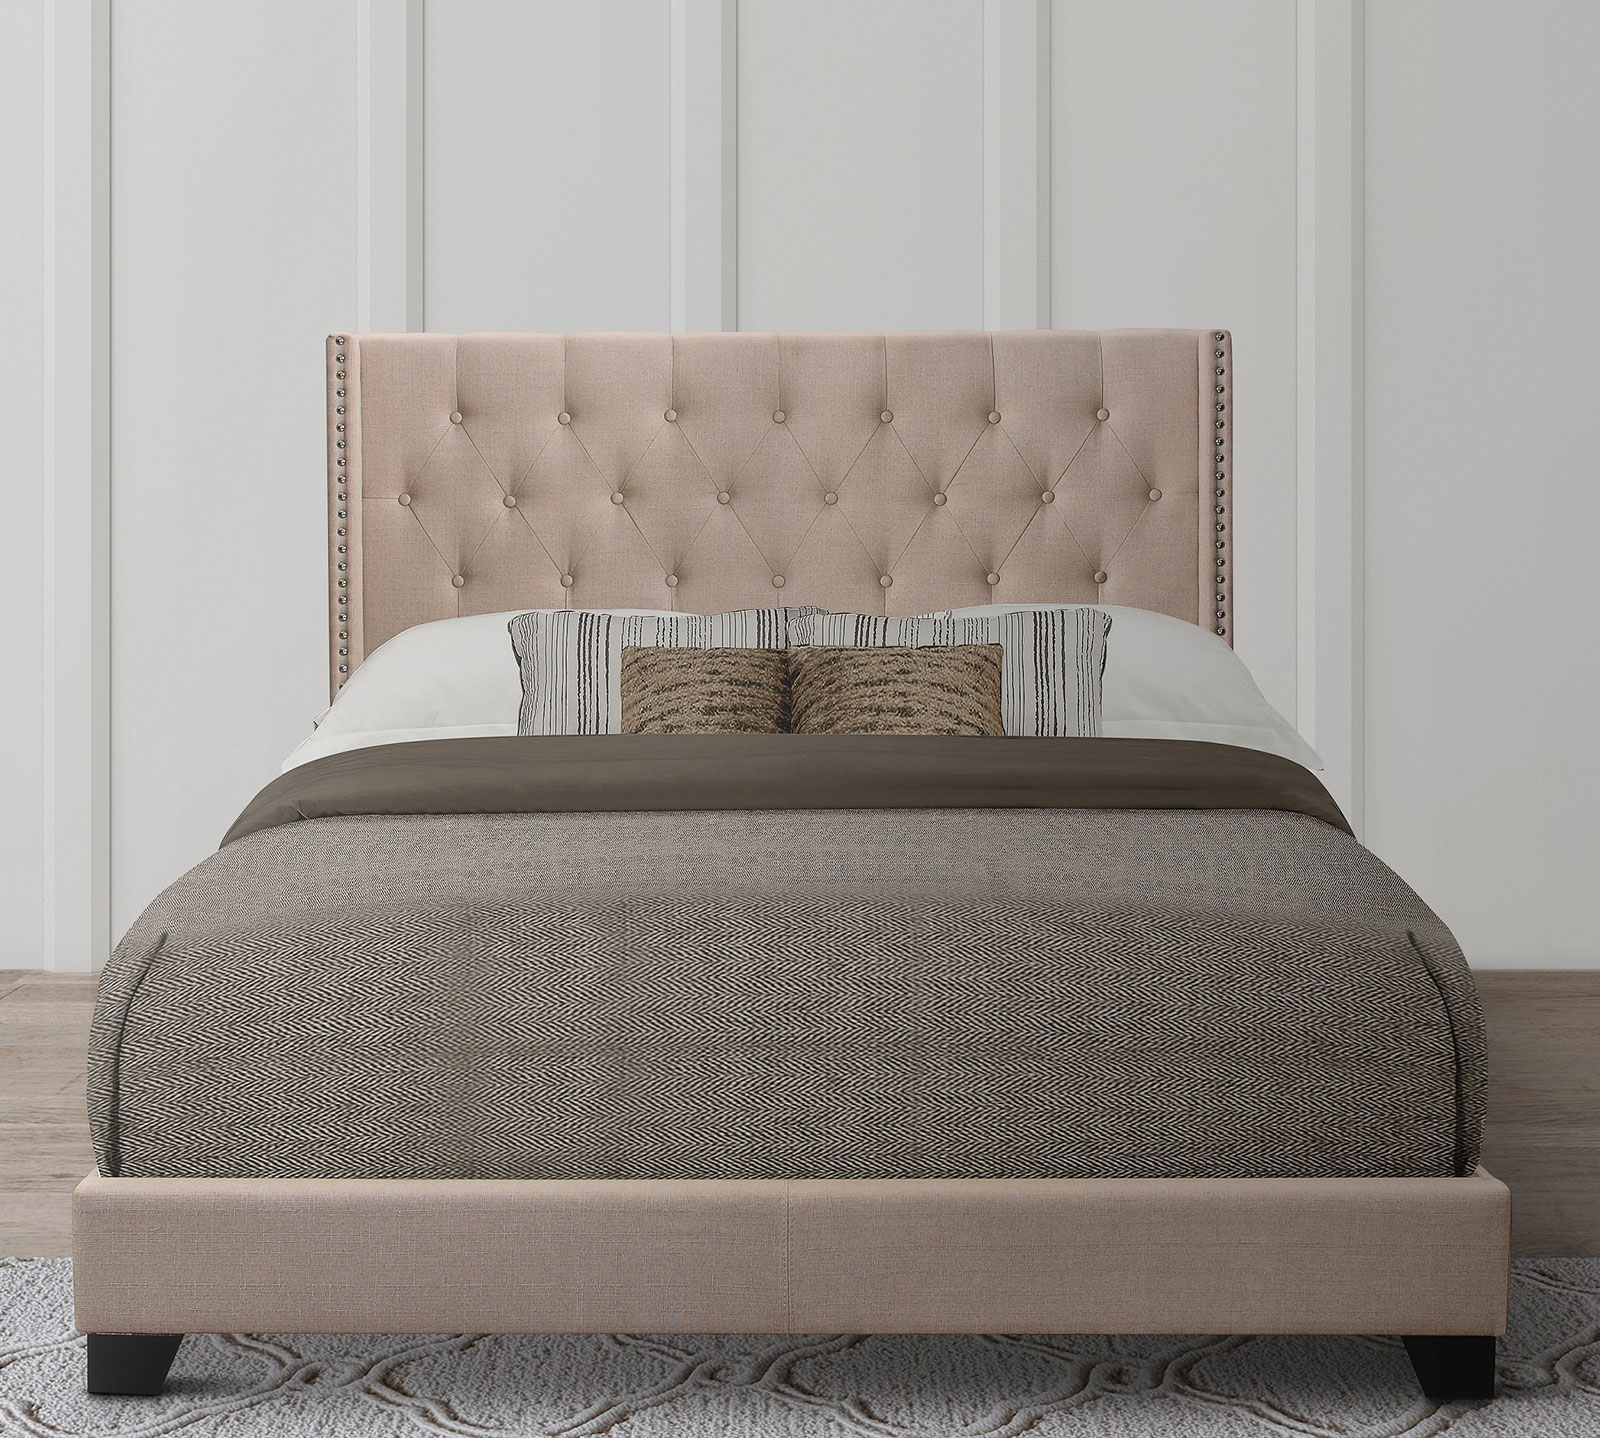 Homelegance Upholstered Bed Set | Queen | Avery Bed Frame & Headboard | Beige